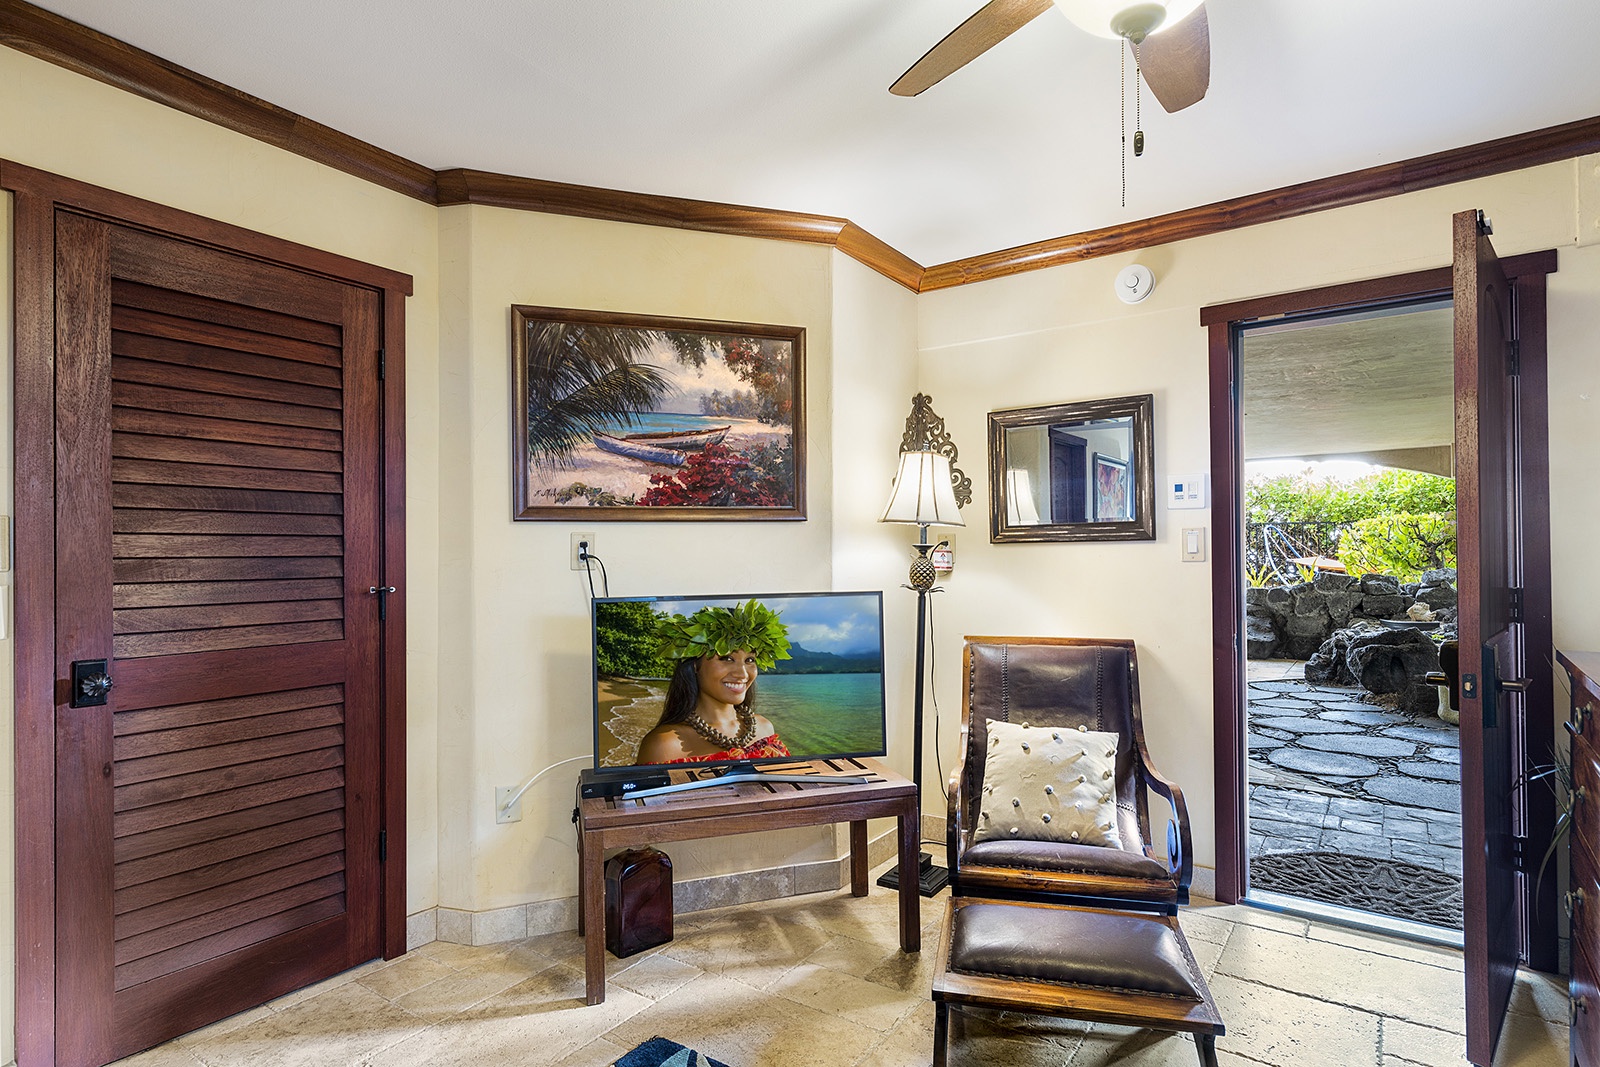 Kailua Kona Vacation Rentals, Mermaid Cove - Seating area in the ground floor bedroom